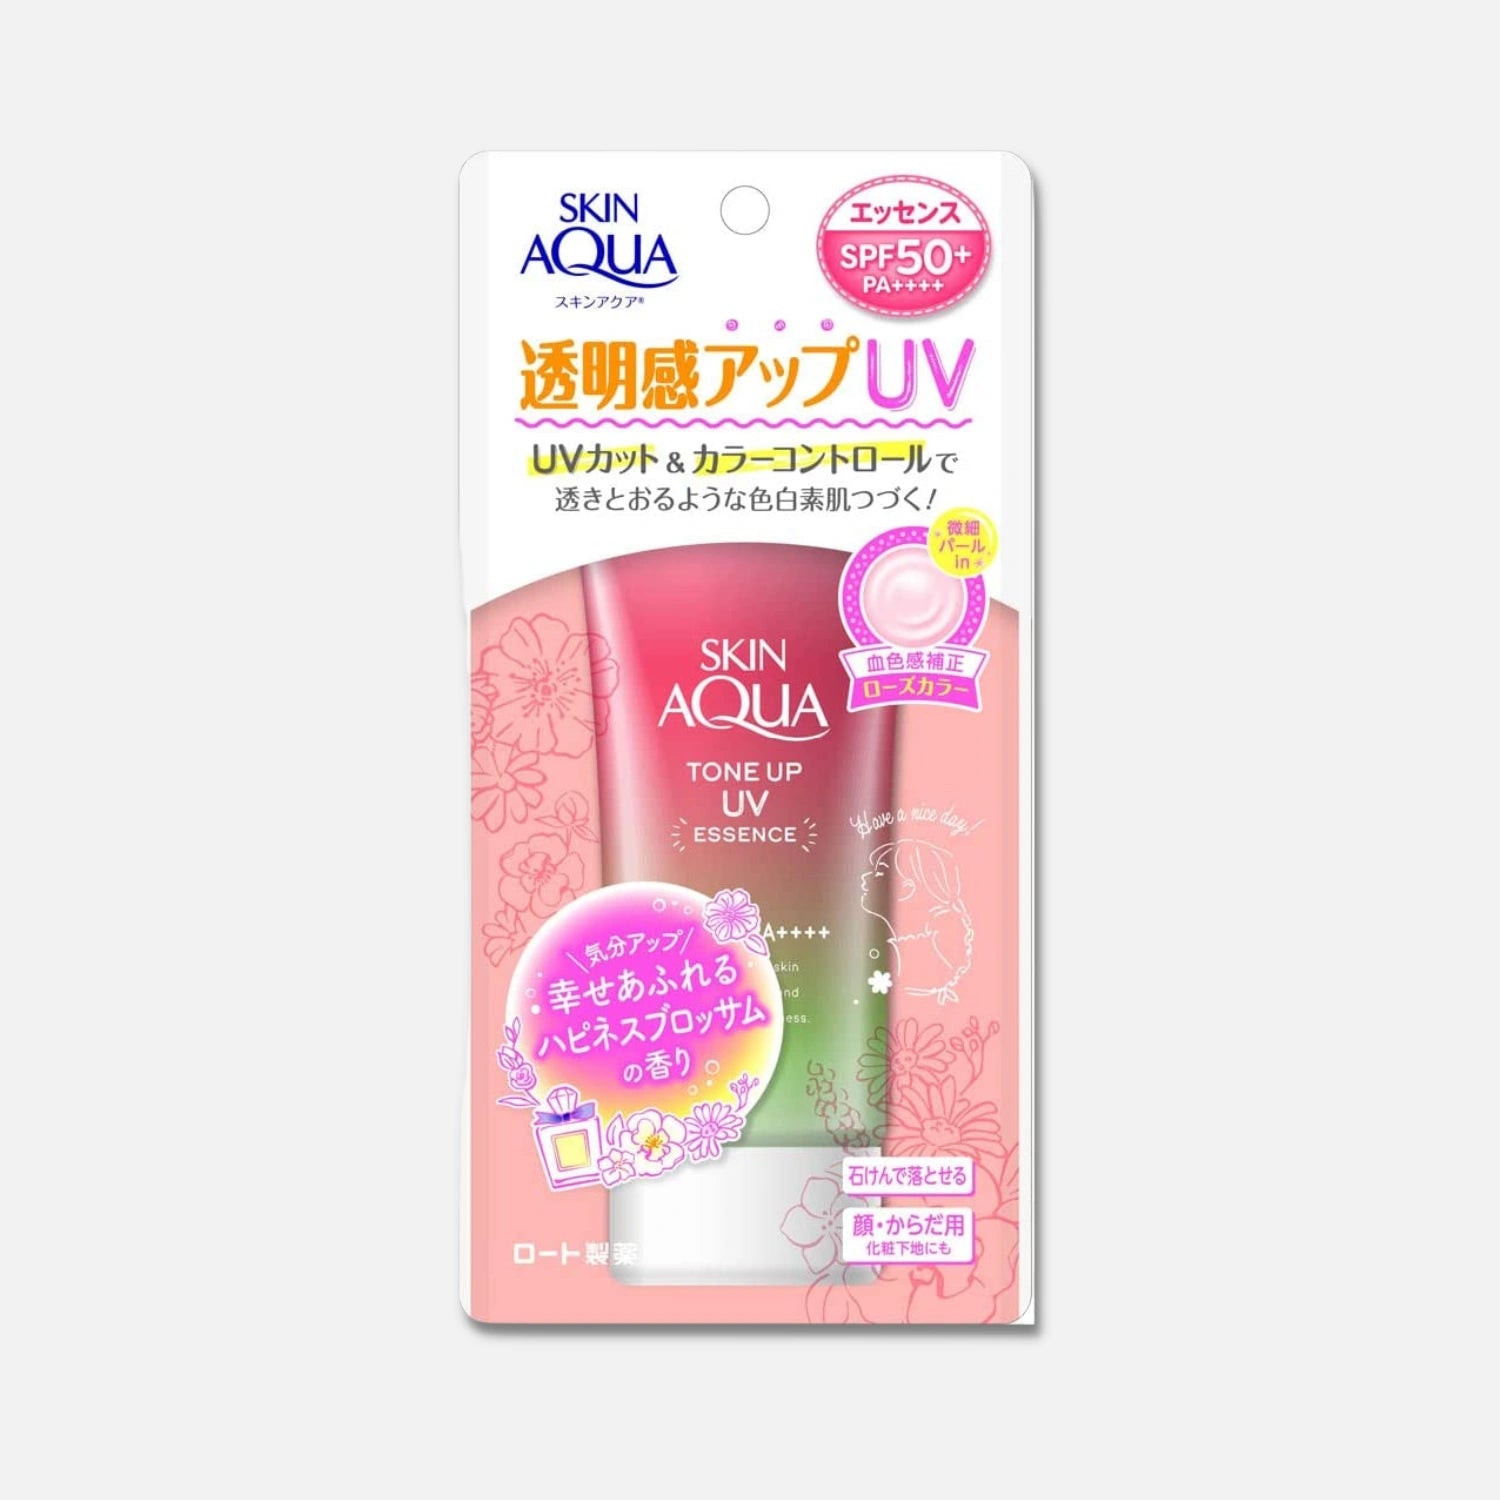 Skin Aqua Tone Up UV Essence Happiness Aura SPF 50+ PA++++ 80g - Buy Me Japan